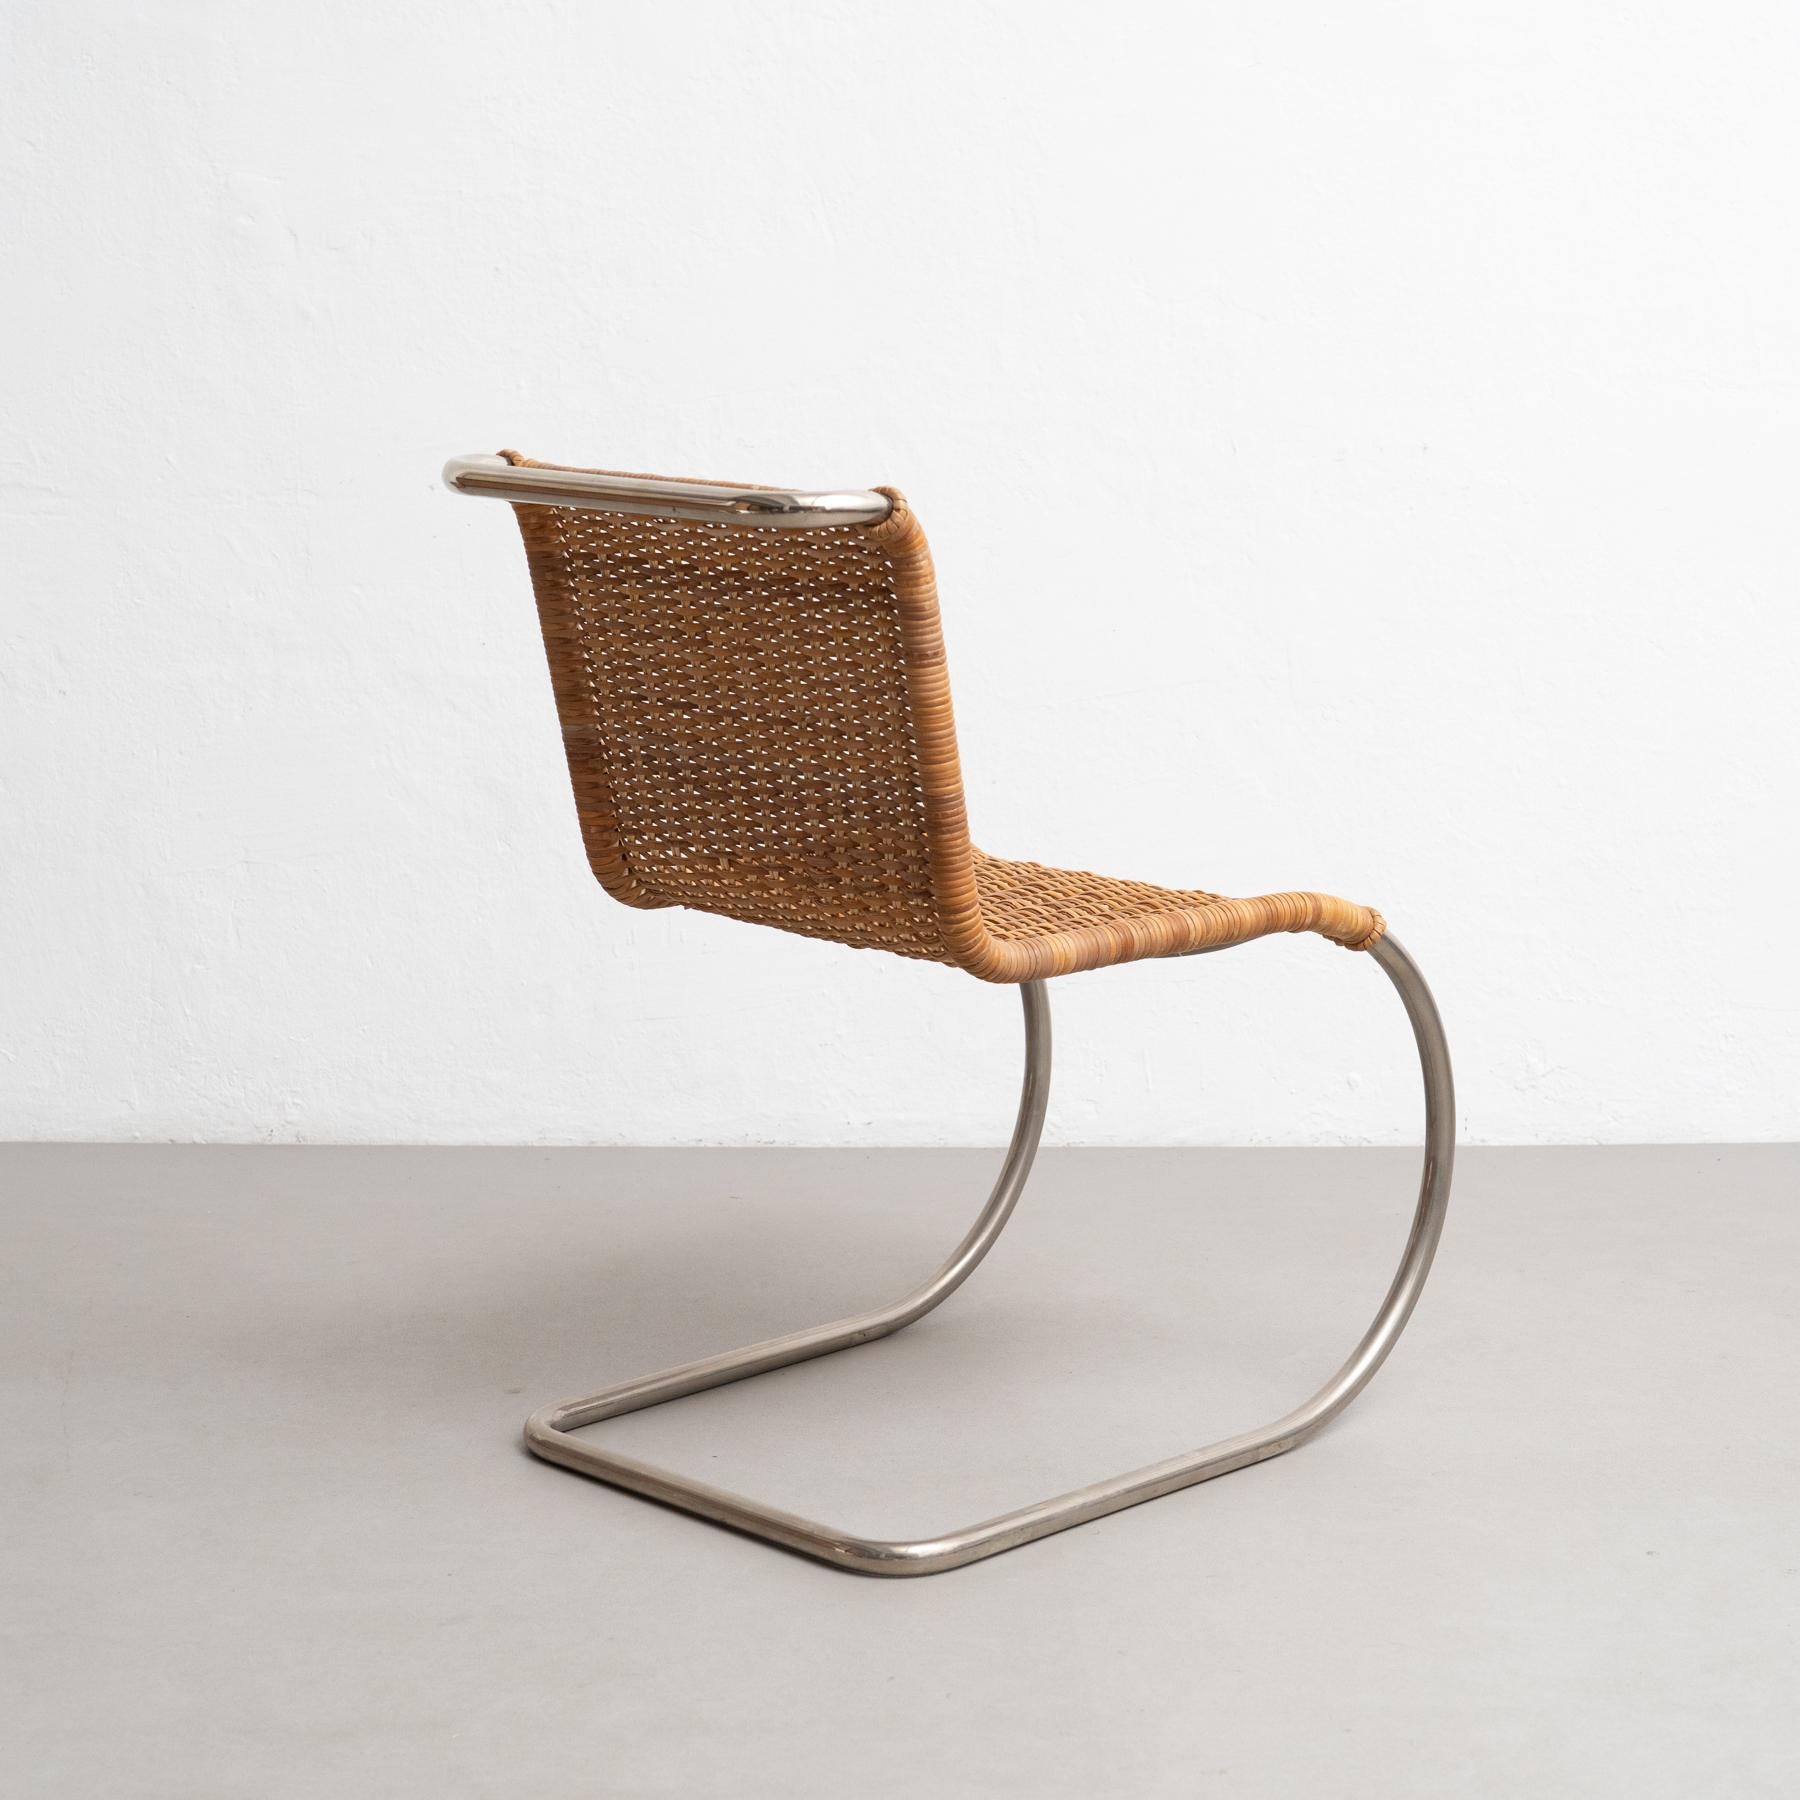 Allemand Mies Van Der Rohe B42 Rattan Easy Chair by Tecta, circa 1960 en vente